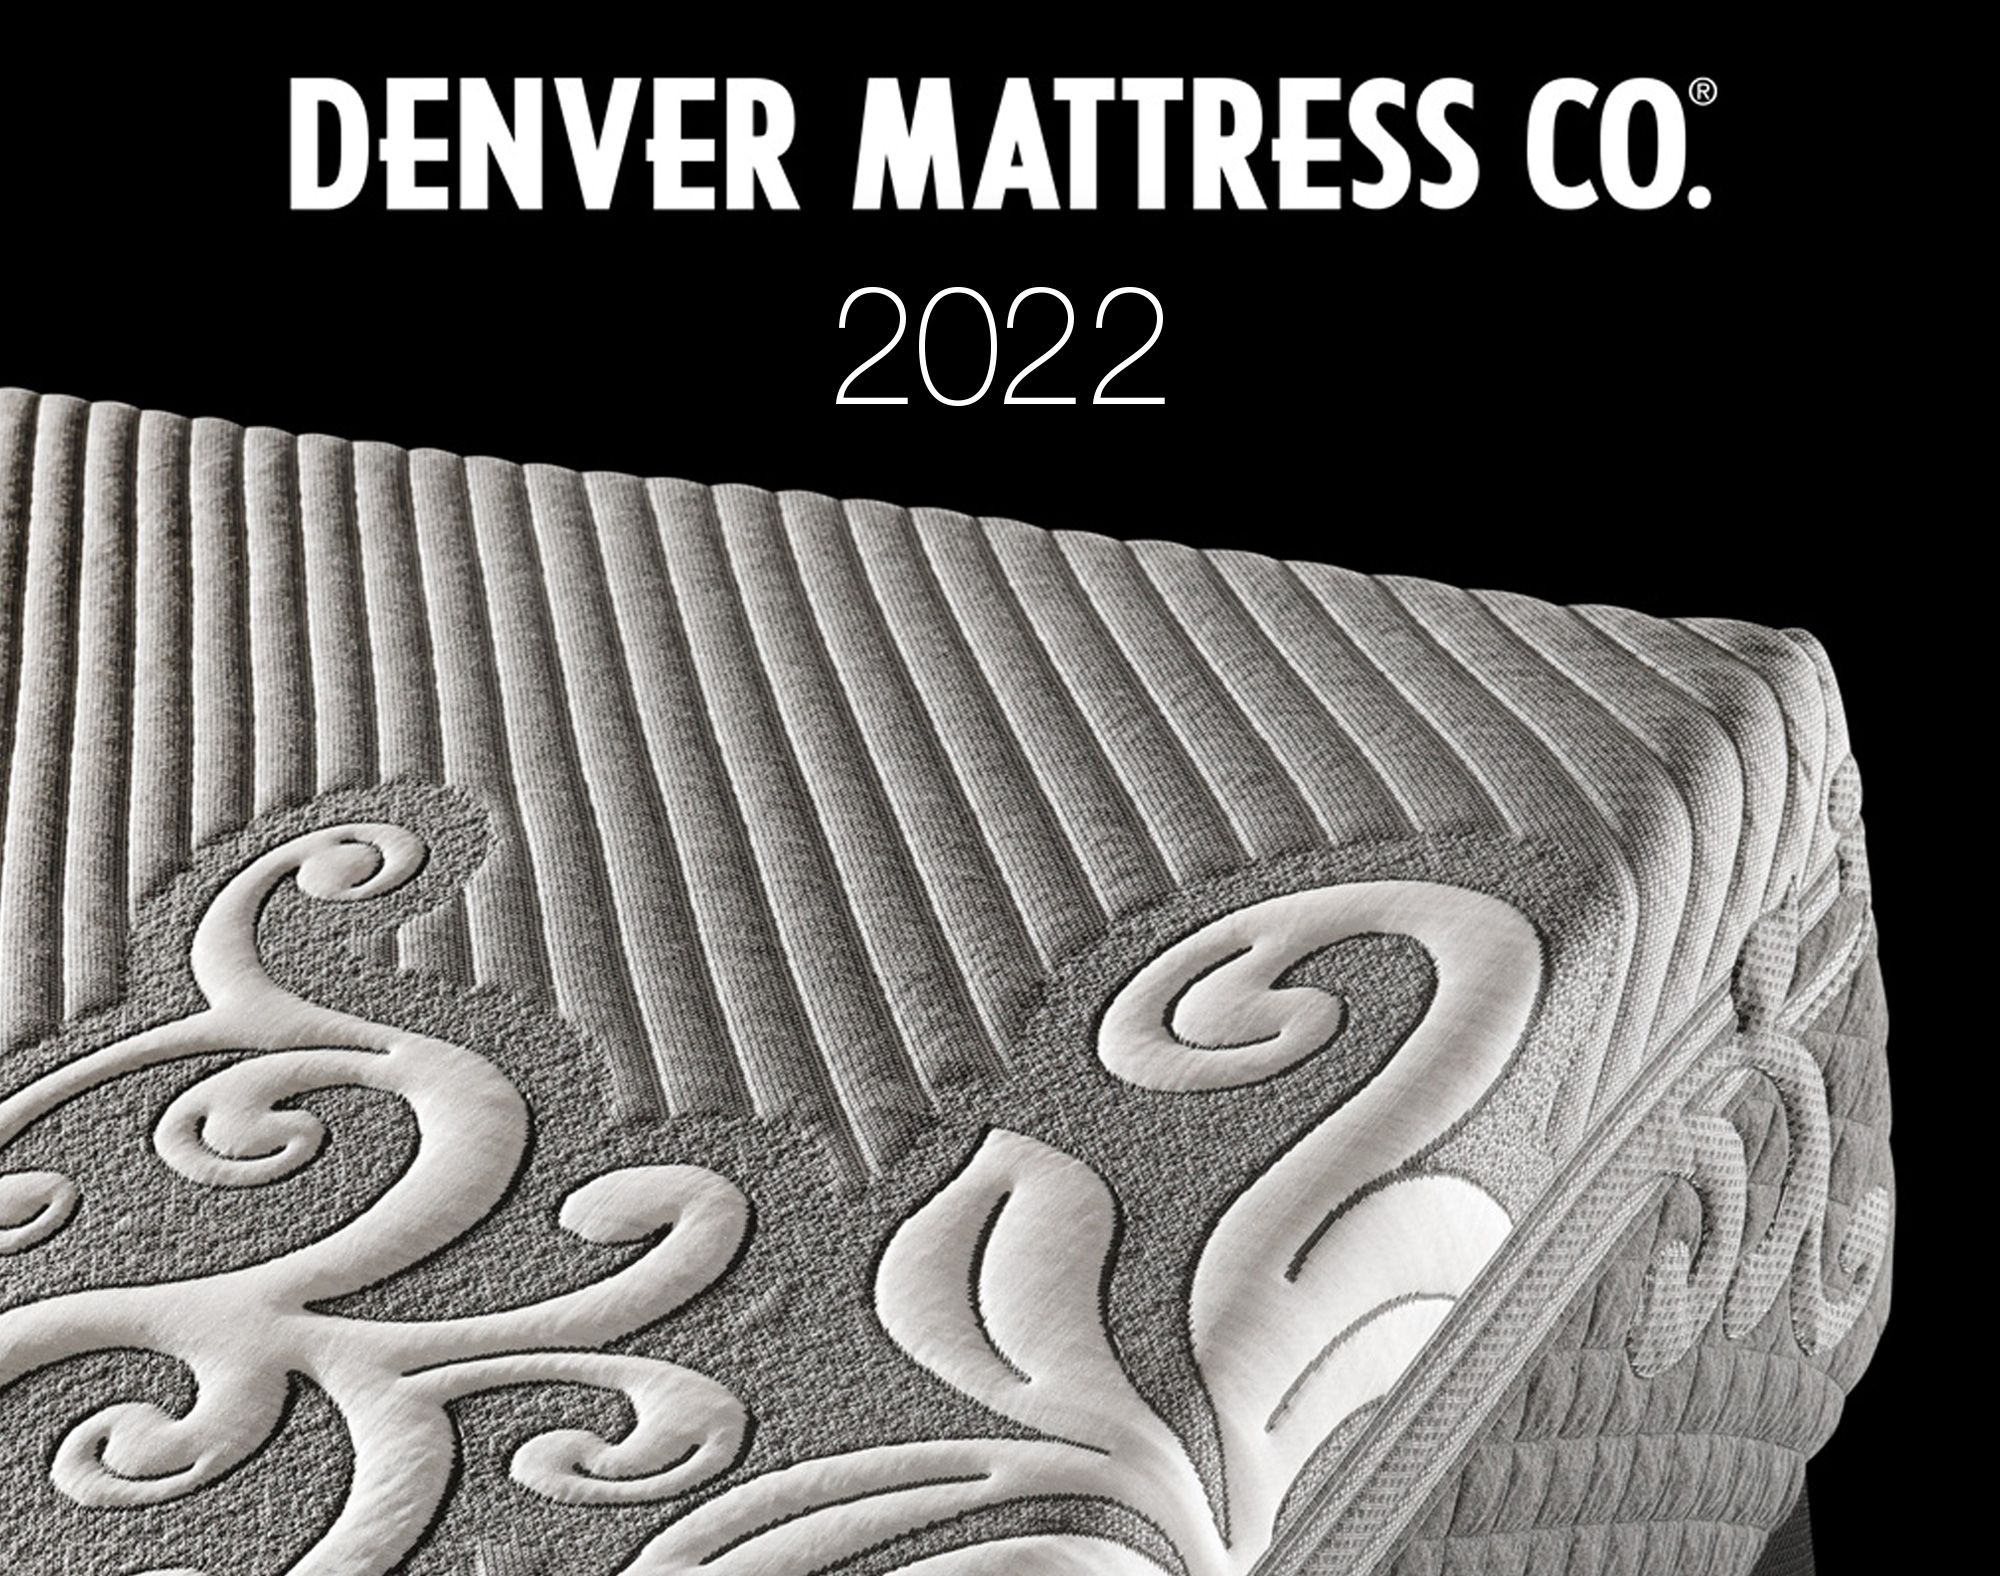 Denver Mattress Co. 2022 Annual Catalog